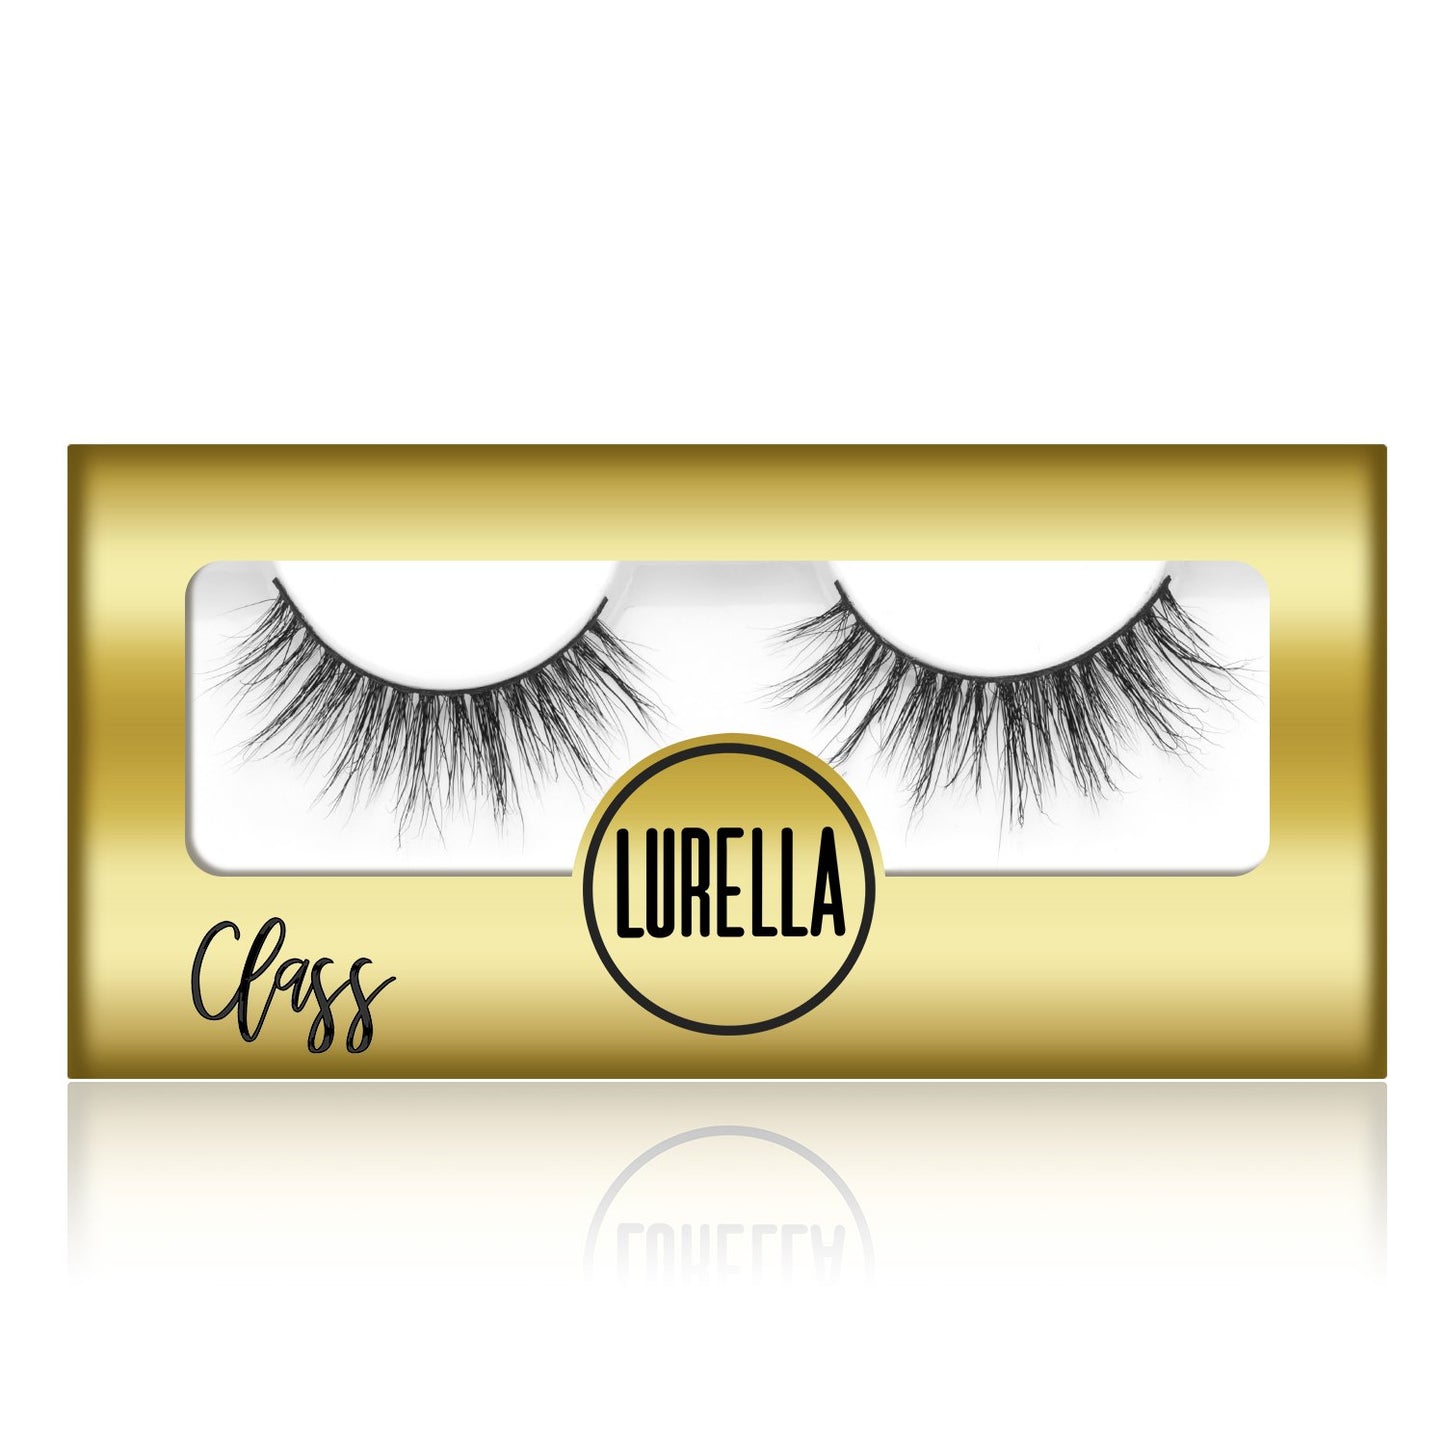 Class - Lurella Cosmetics